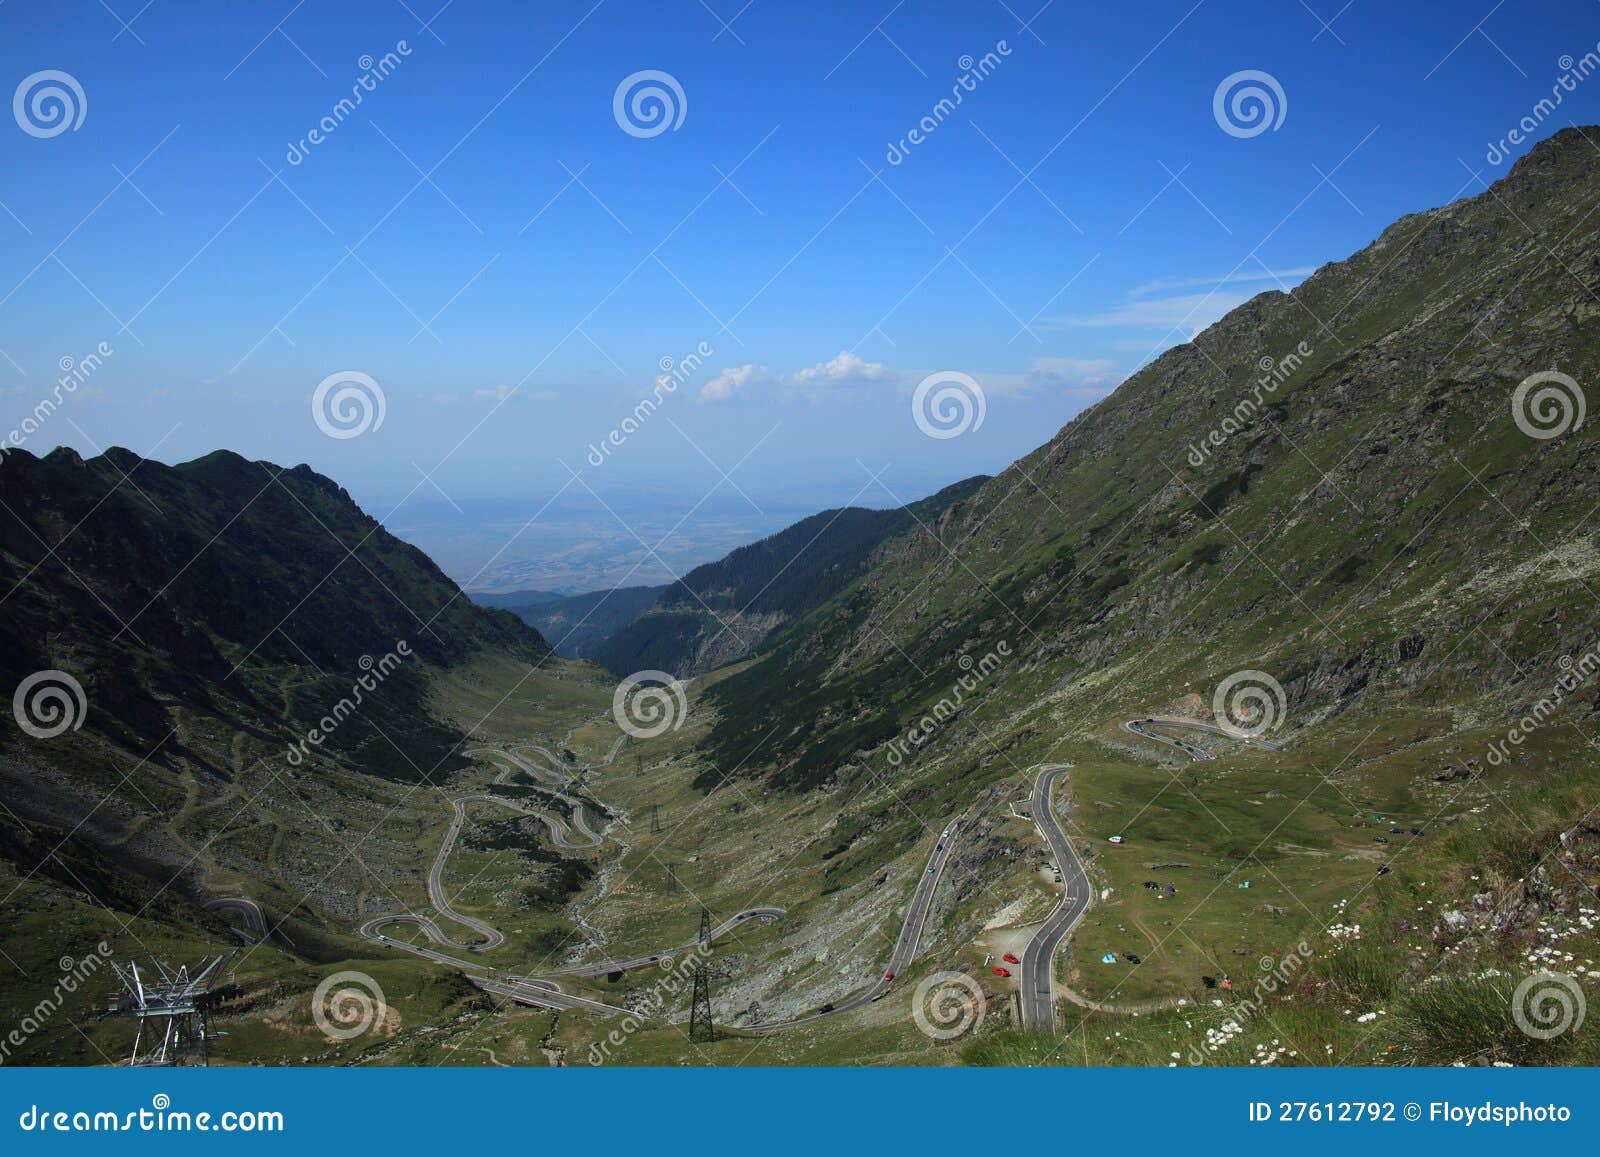 high altitude road